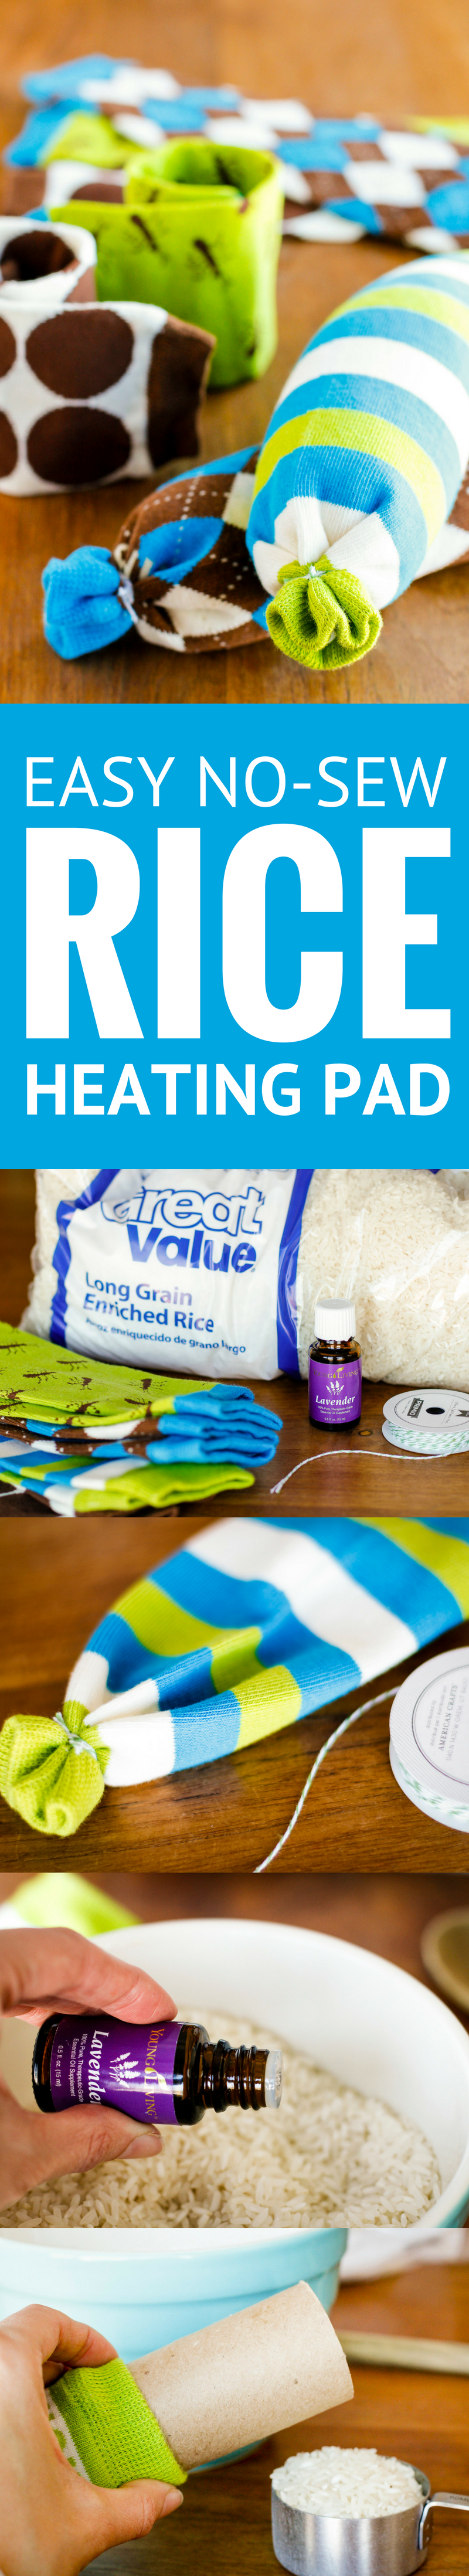 rice sock heating pad instructions